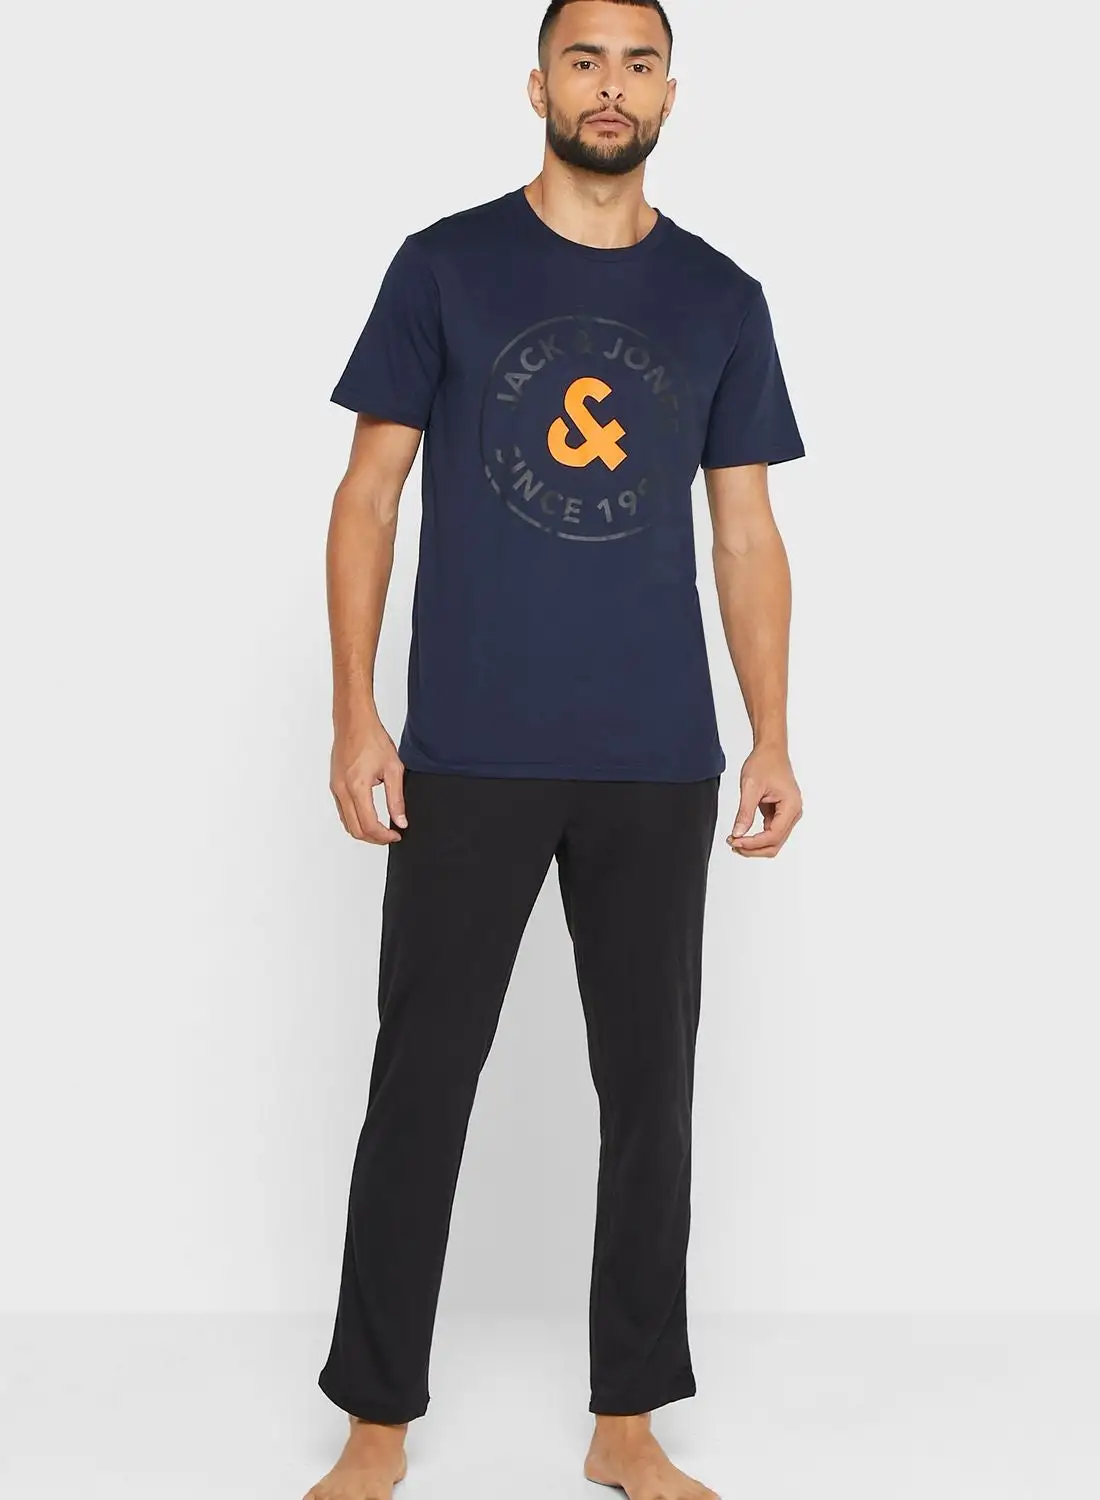 JACK & JONES Logo T-Shirt & Pant Set